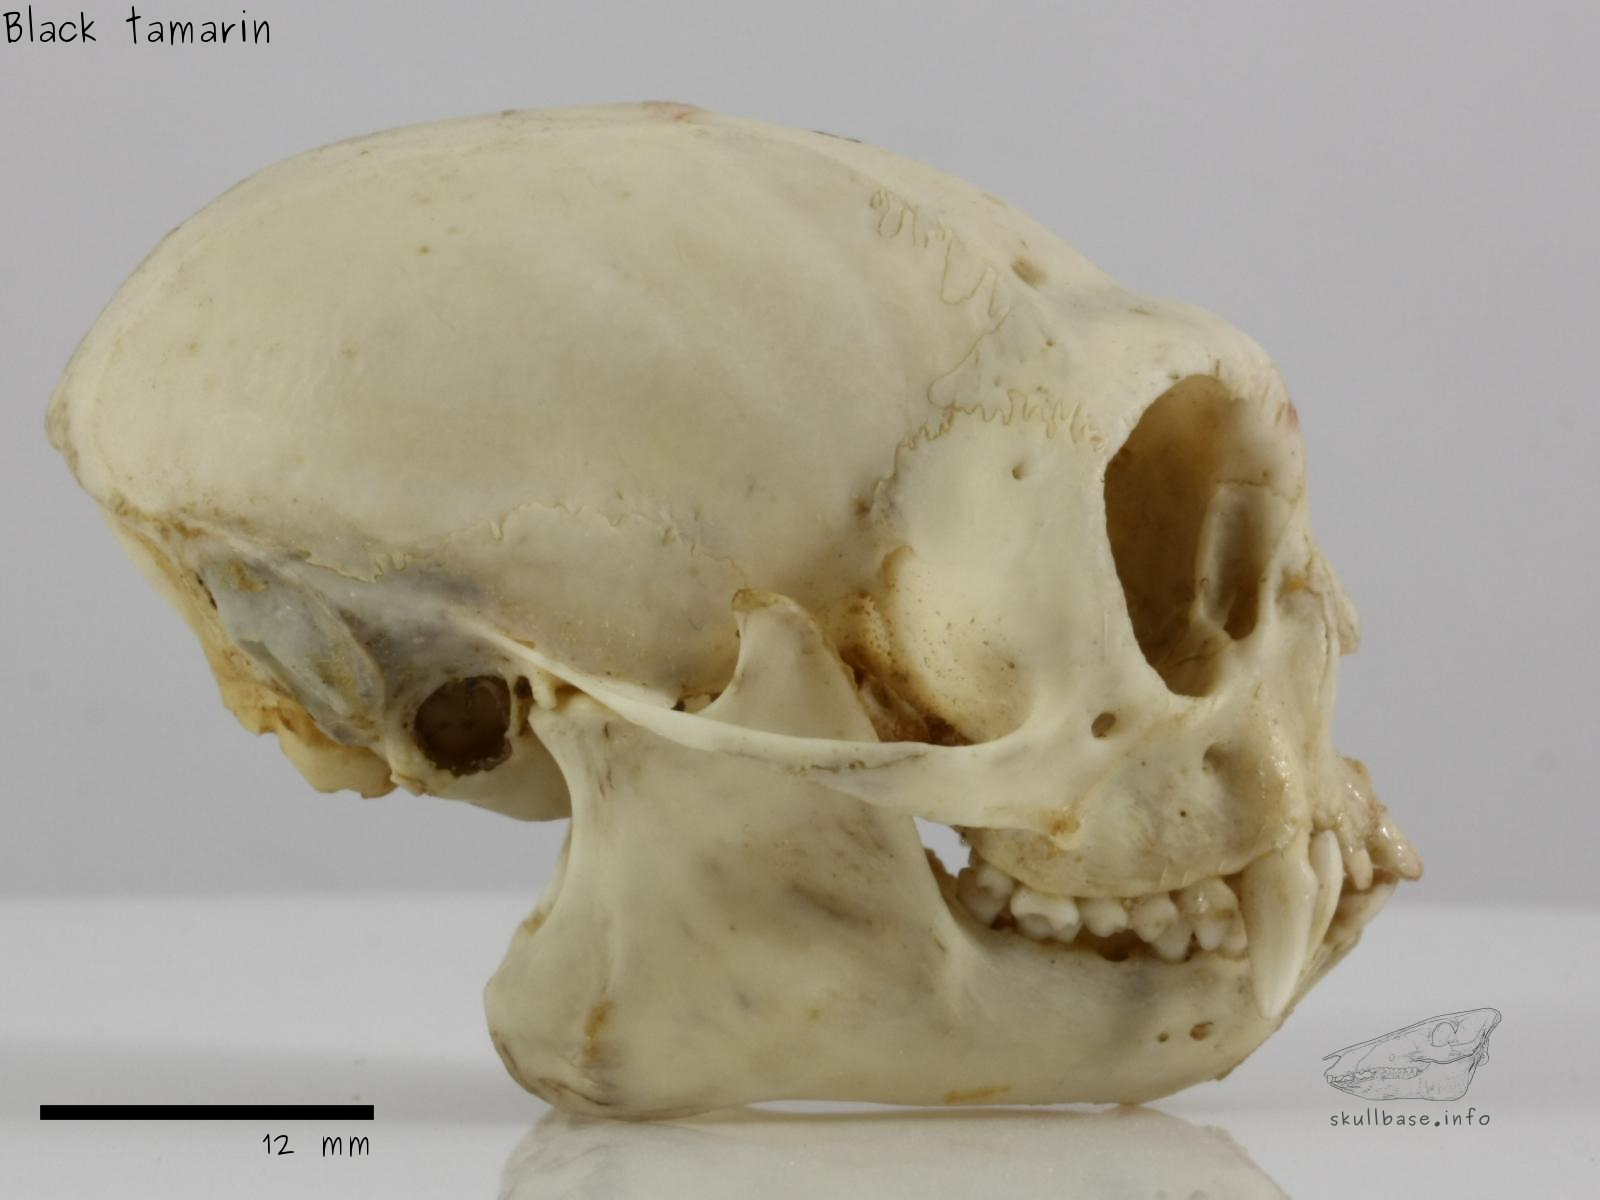 Black tamarin (Saguinus niger) skull lateral view